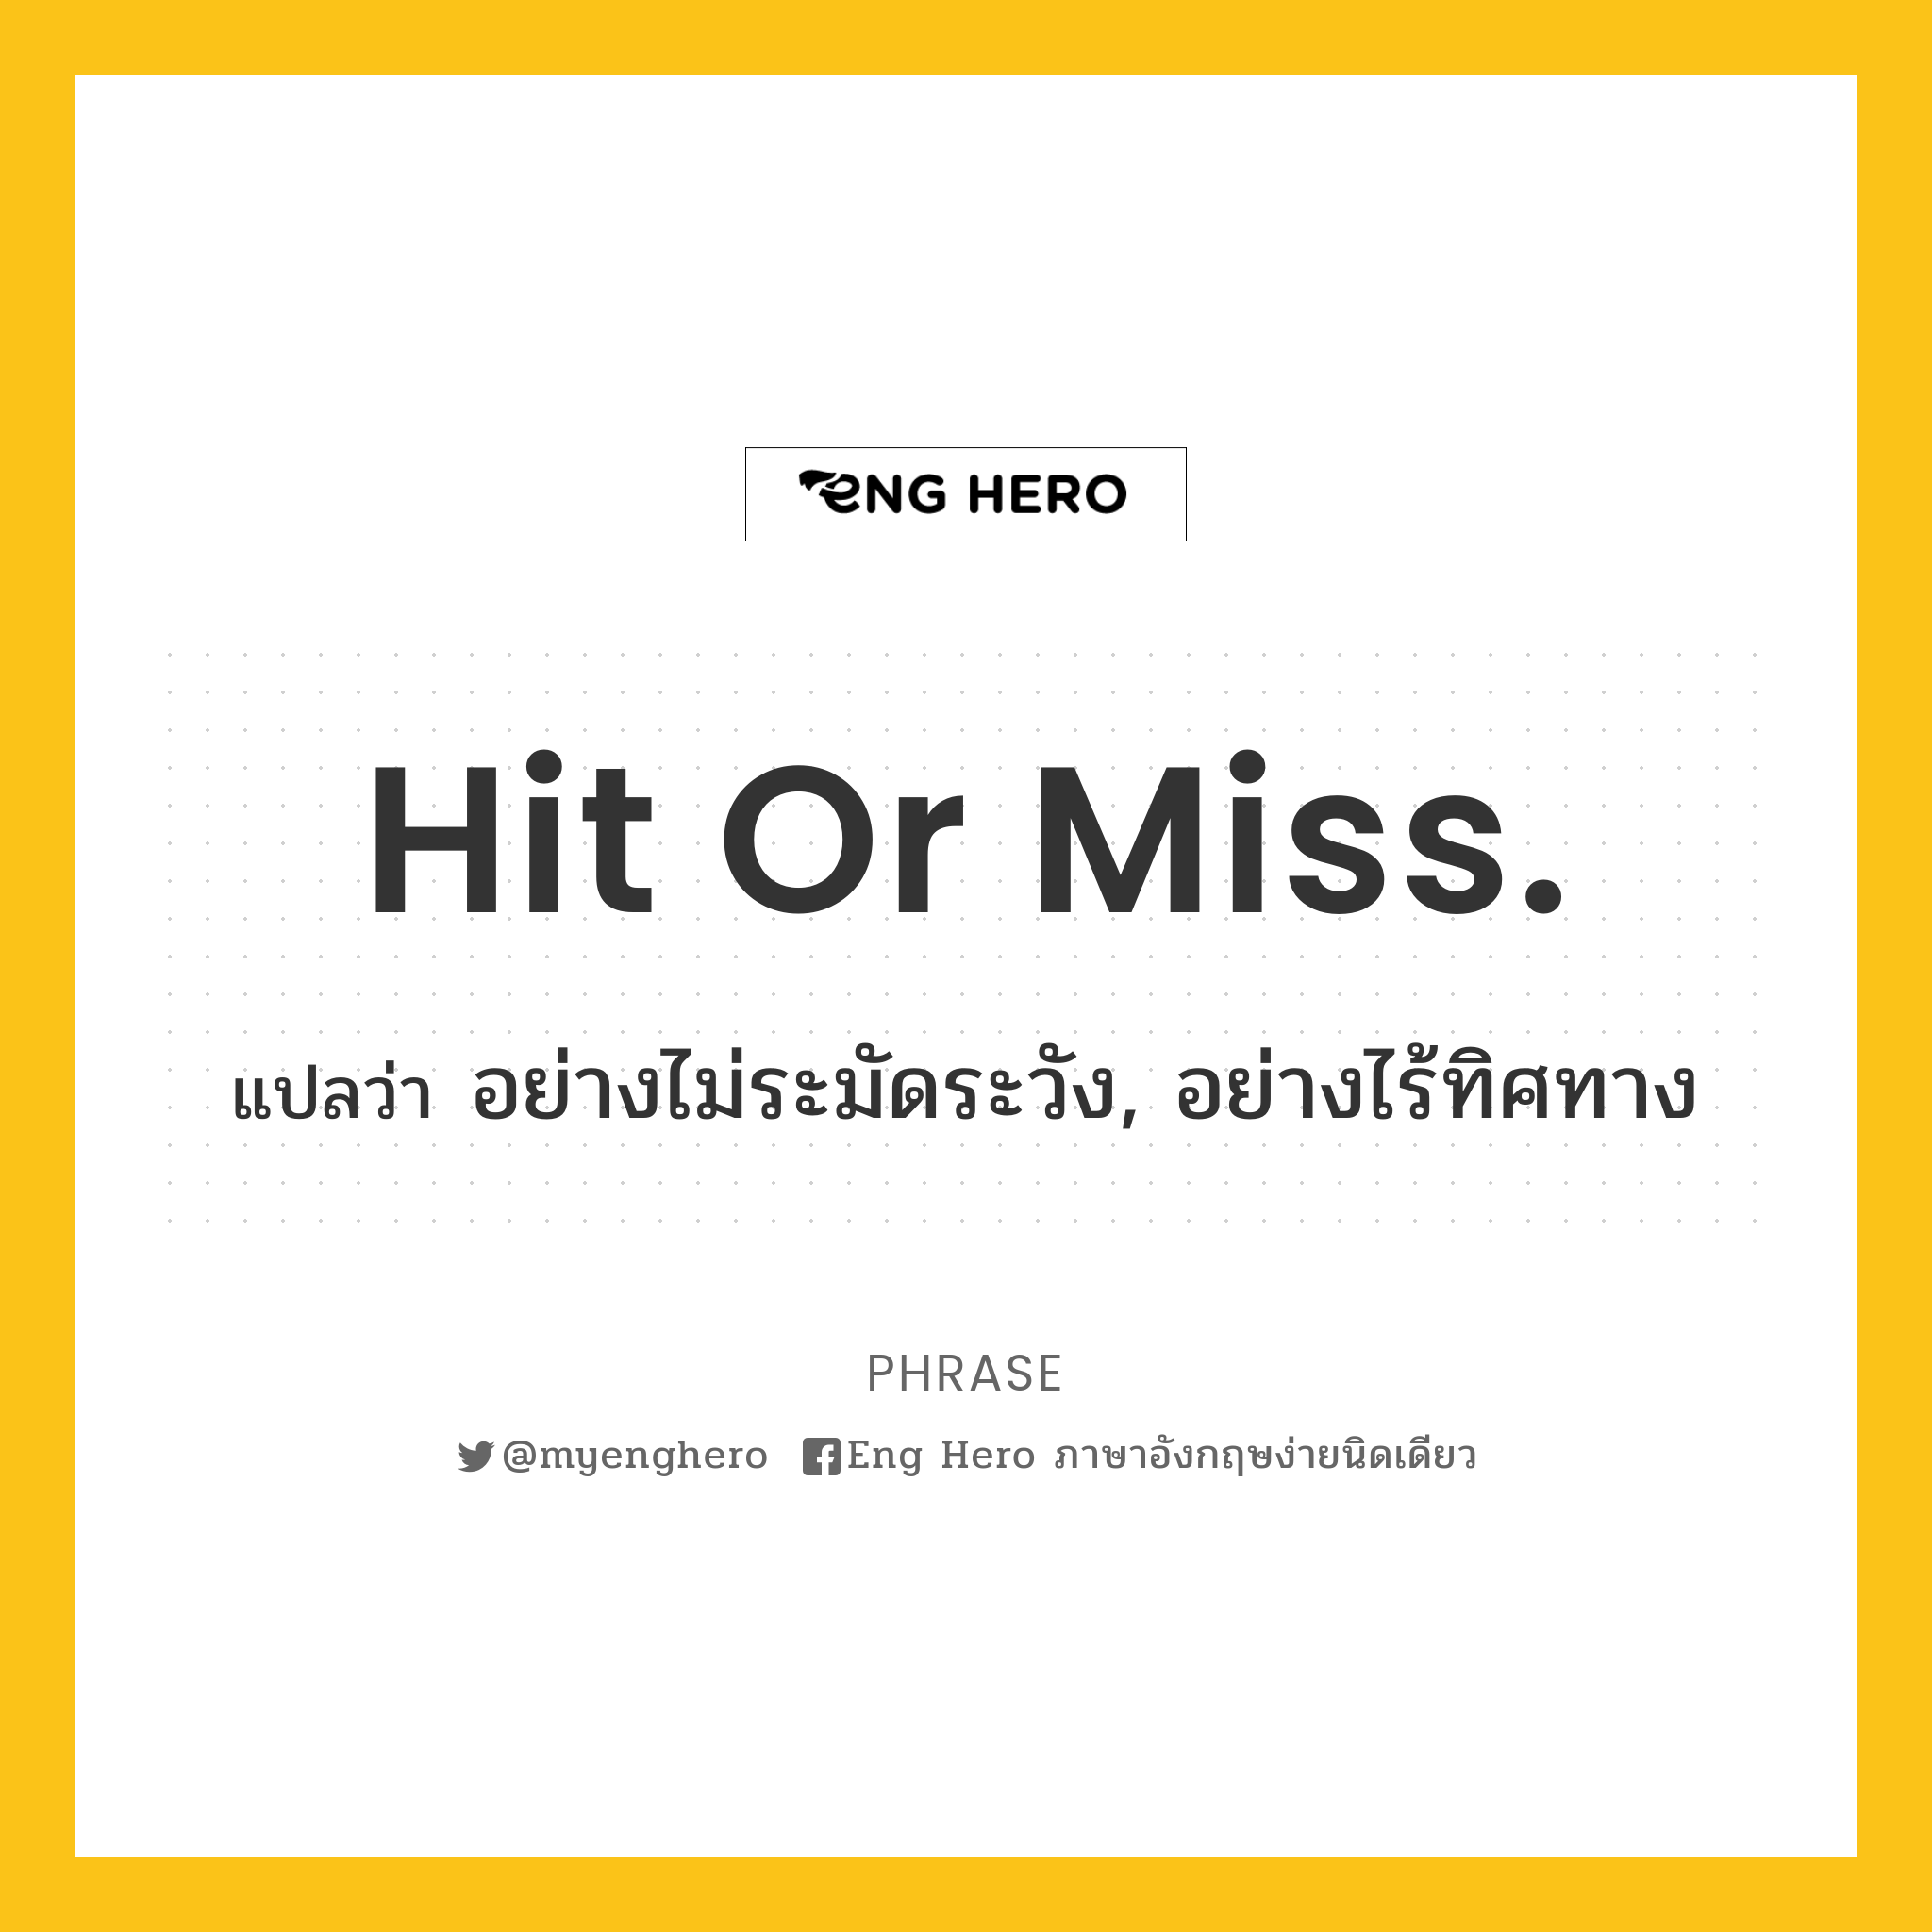 Hit or miss.